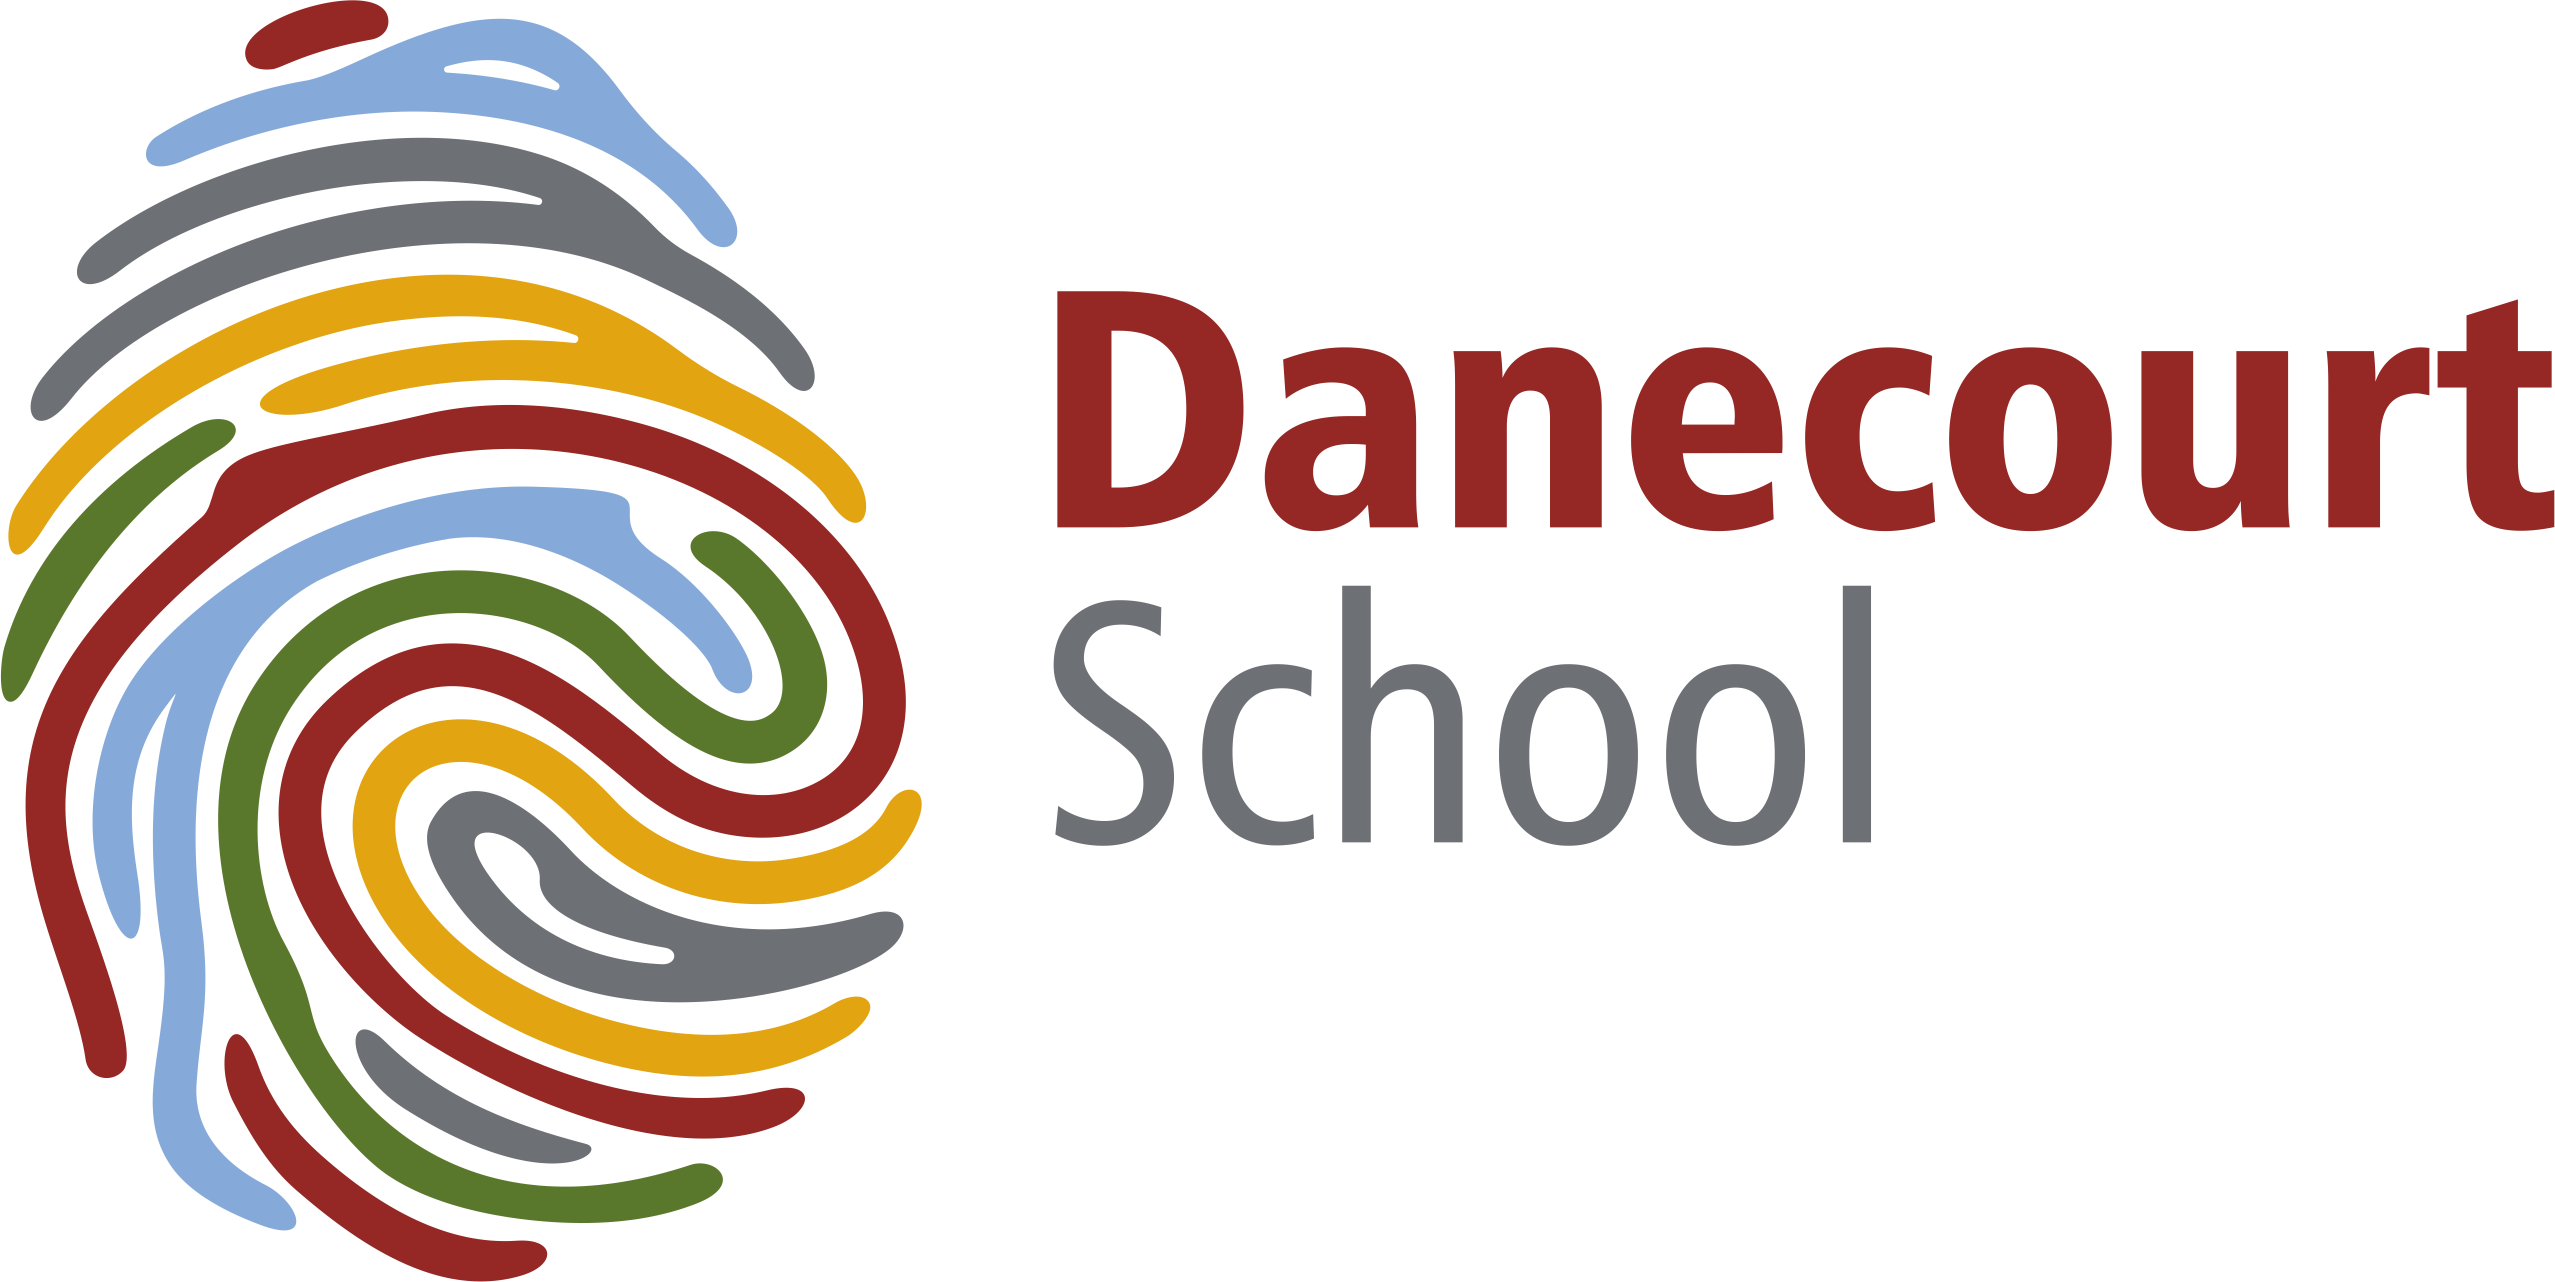 Danecourt School